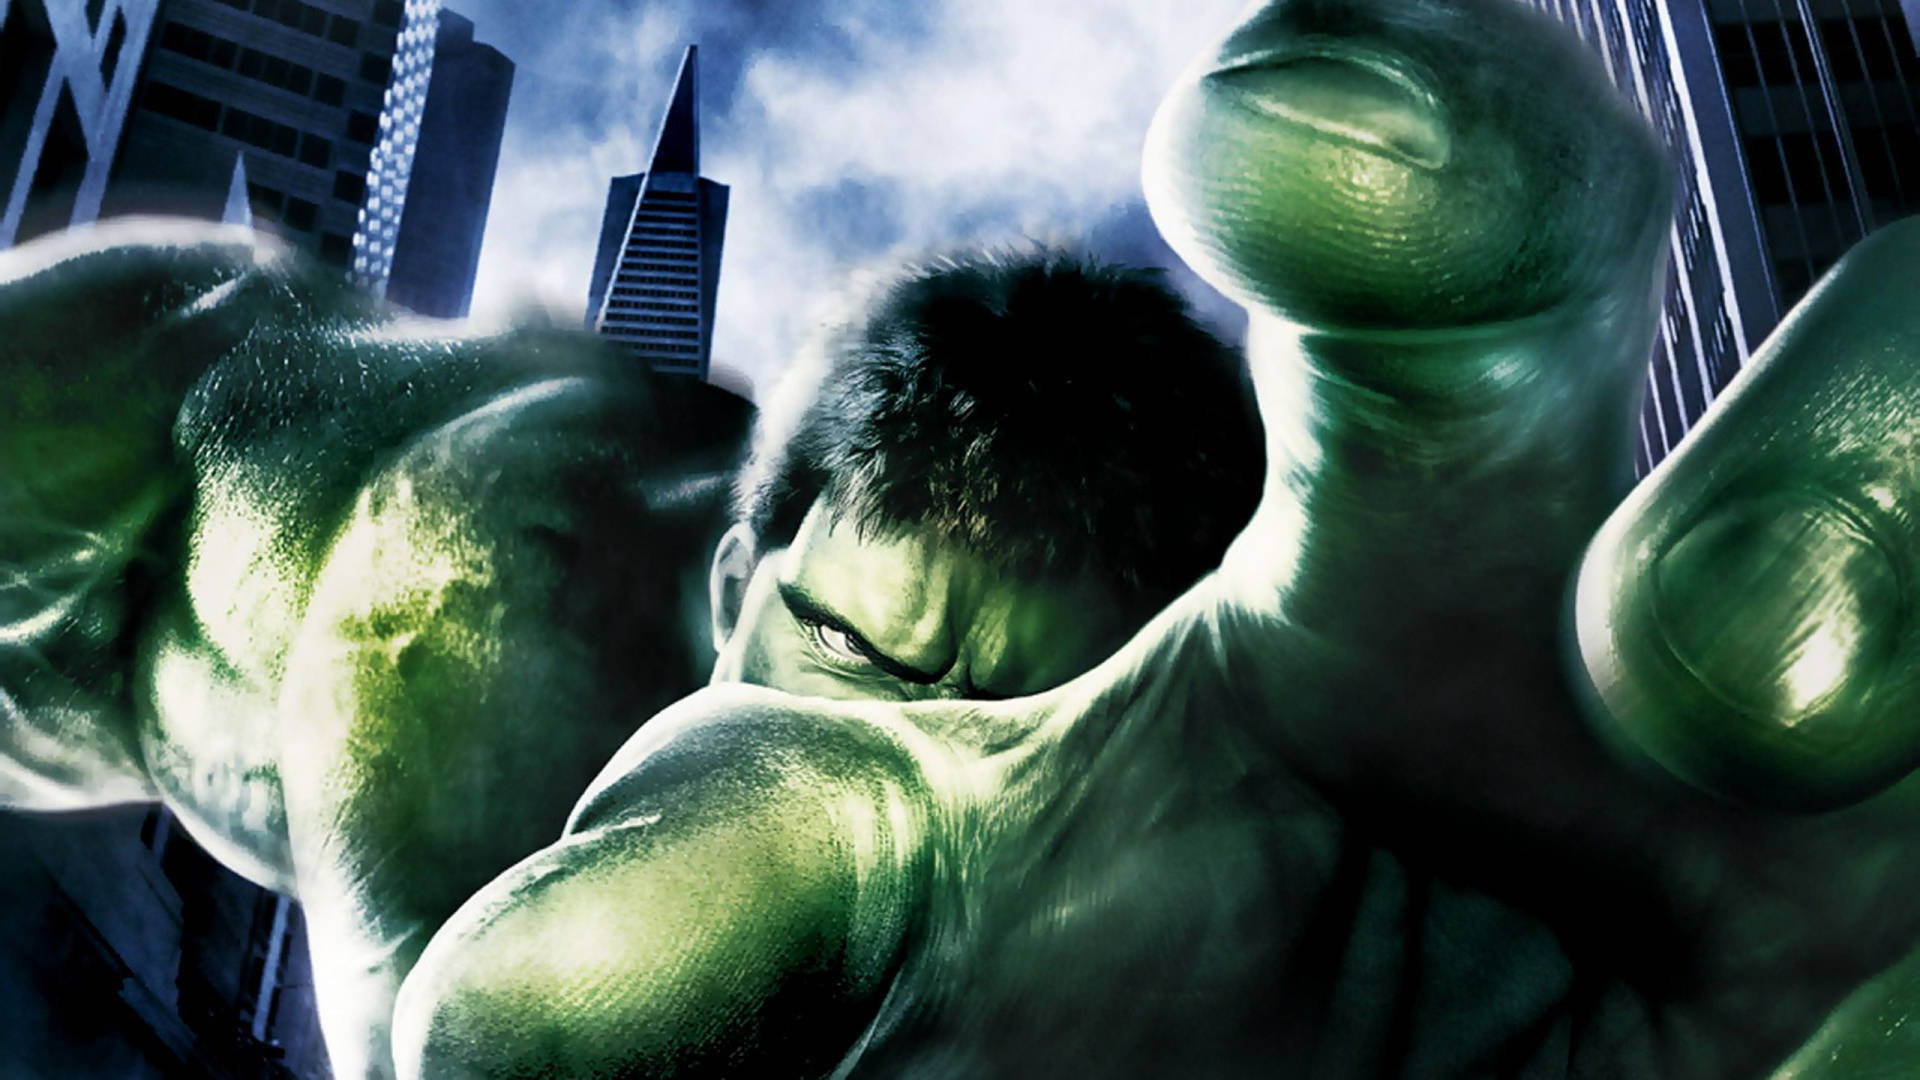 Download 3d Hd Marvel Superhero The Hulk Wallpaper 